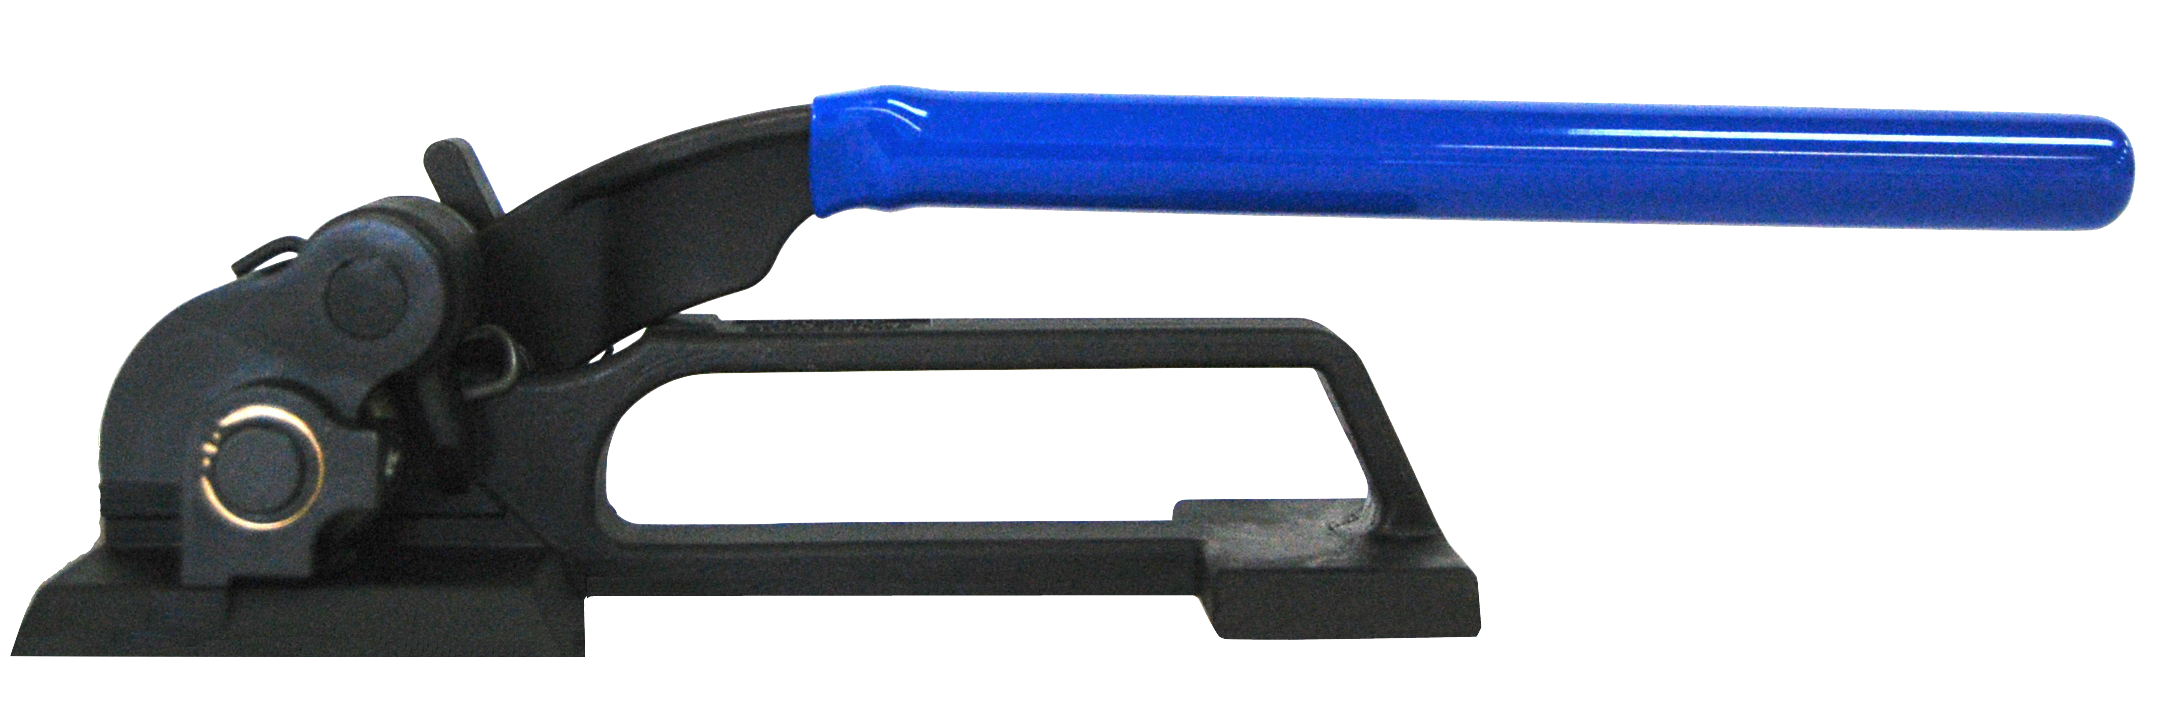 steel strap tensioner